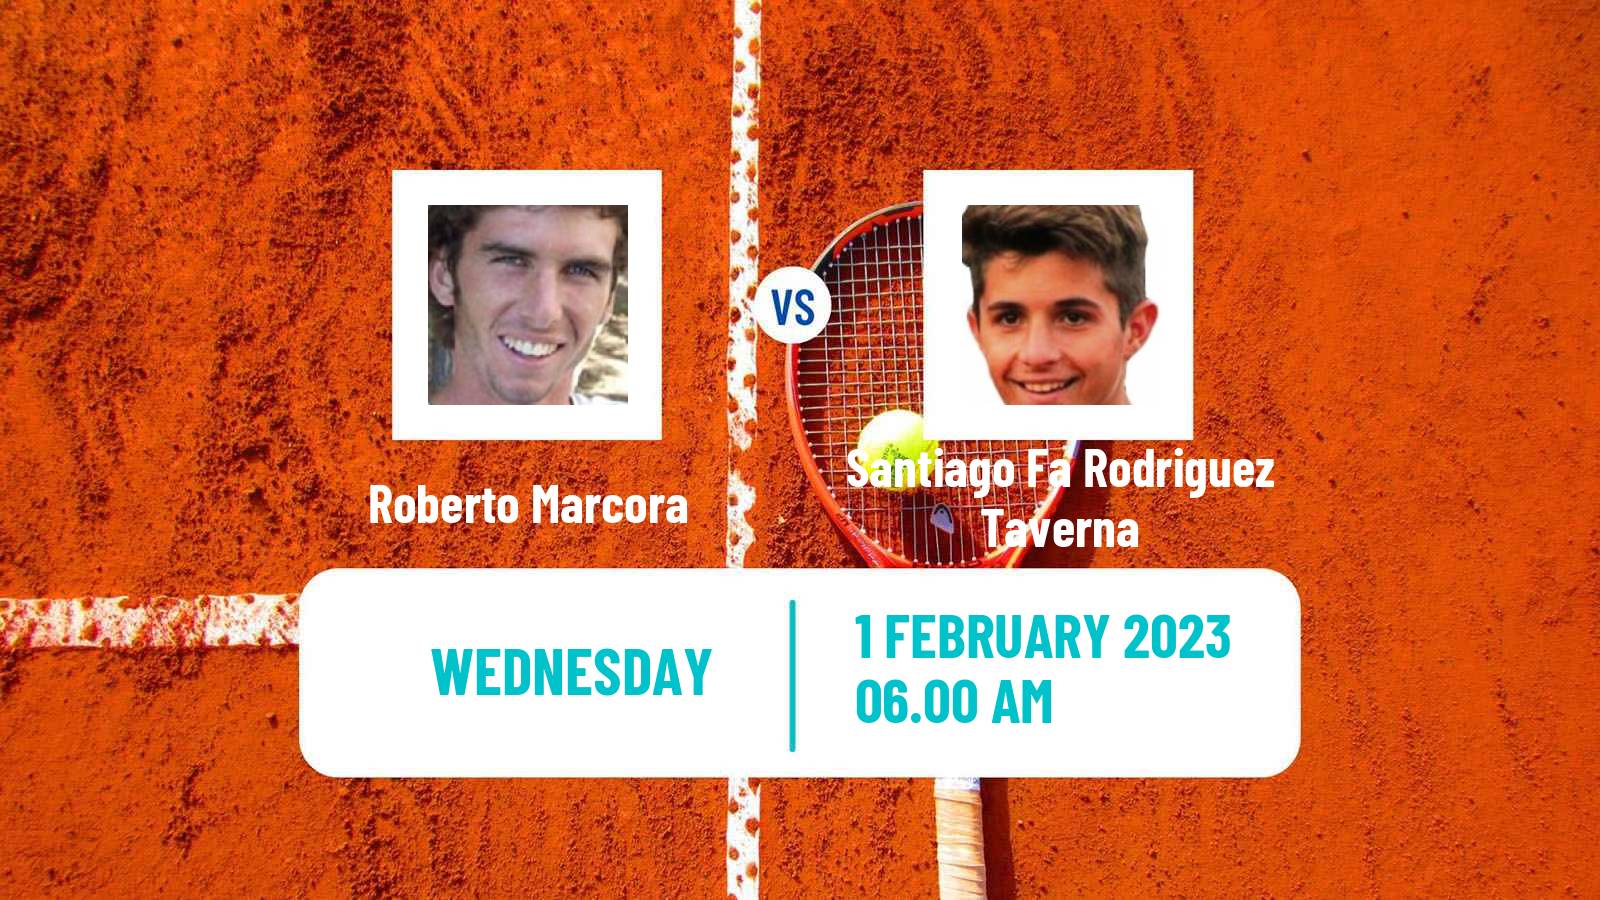 Tennis ATP Challenger Roberto Marcora - Santiago Fa Rodriguez Taverna